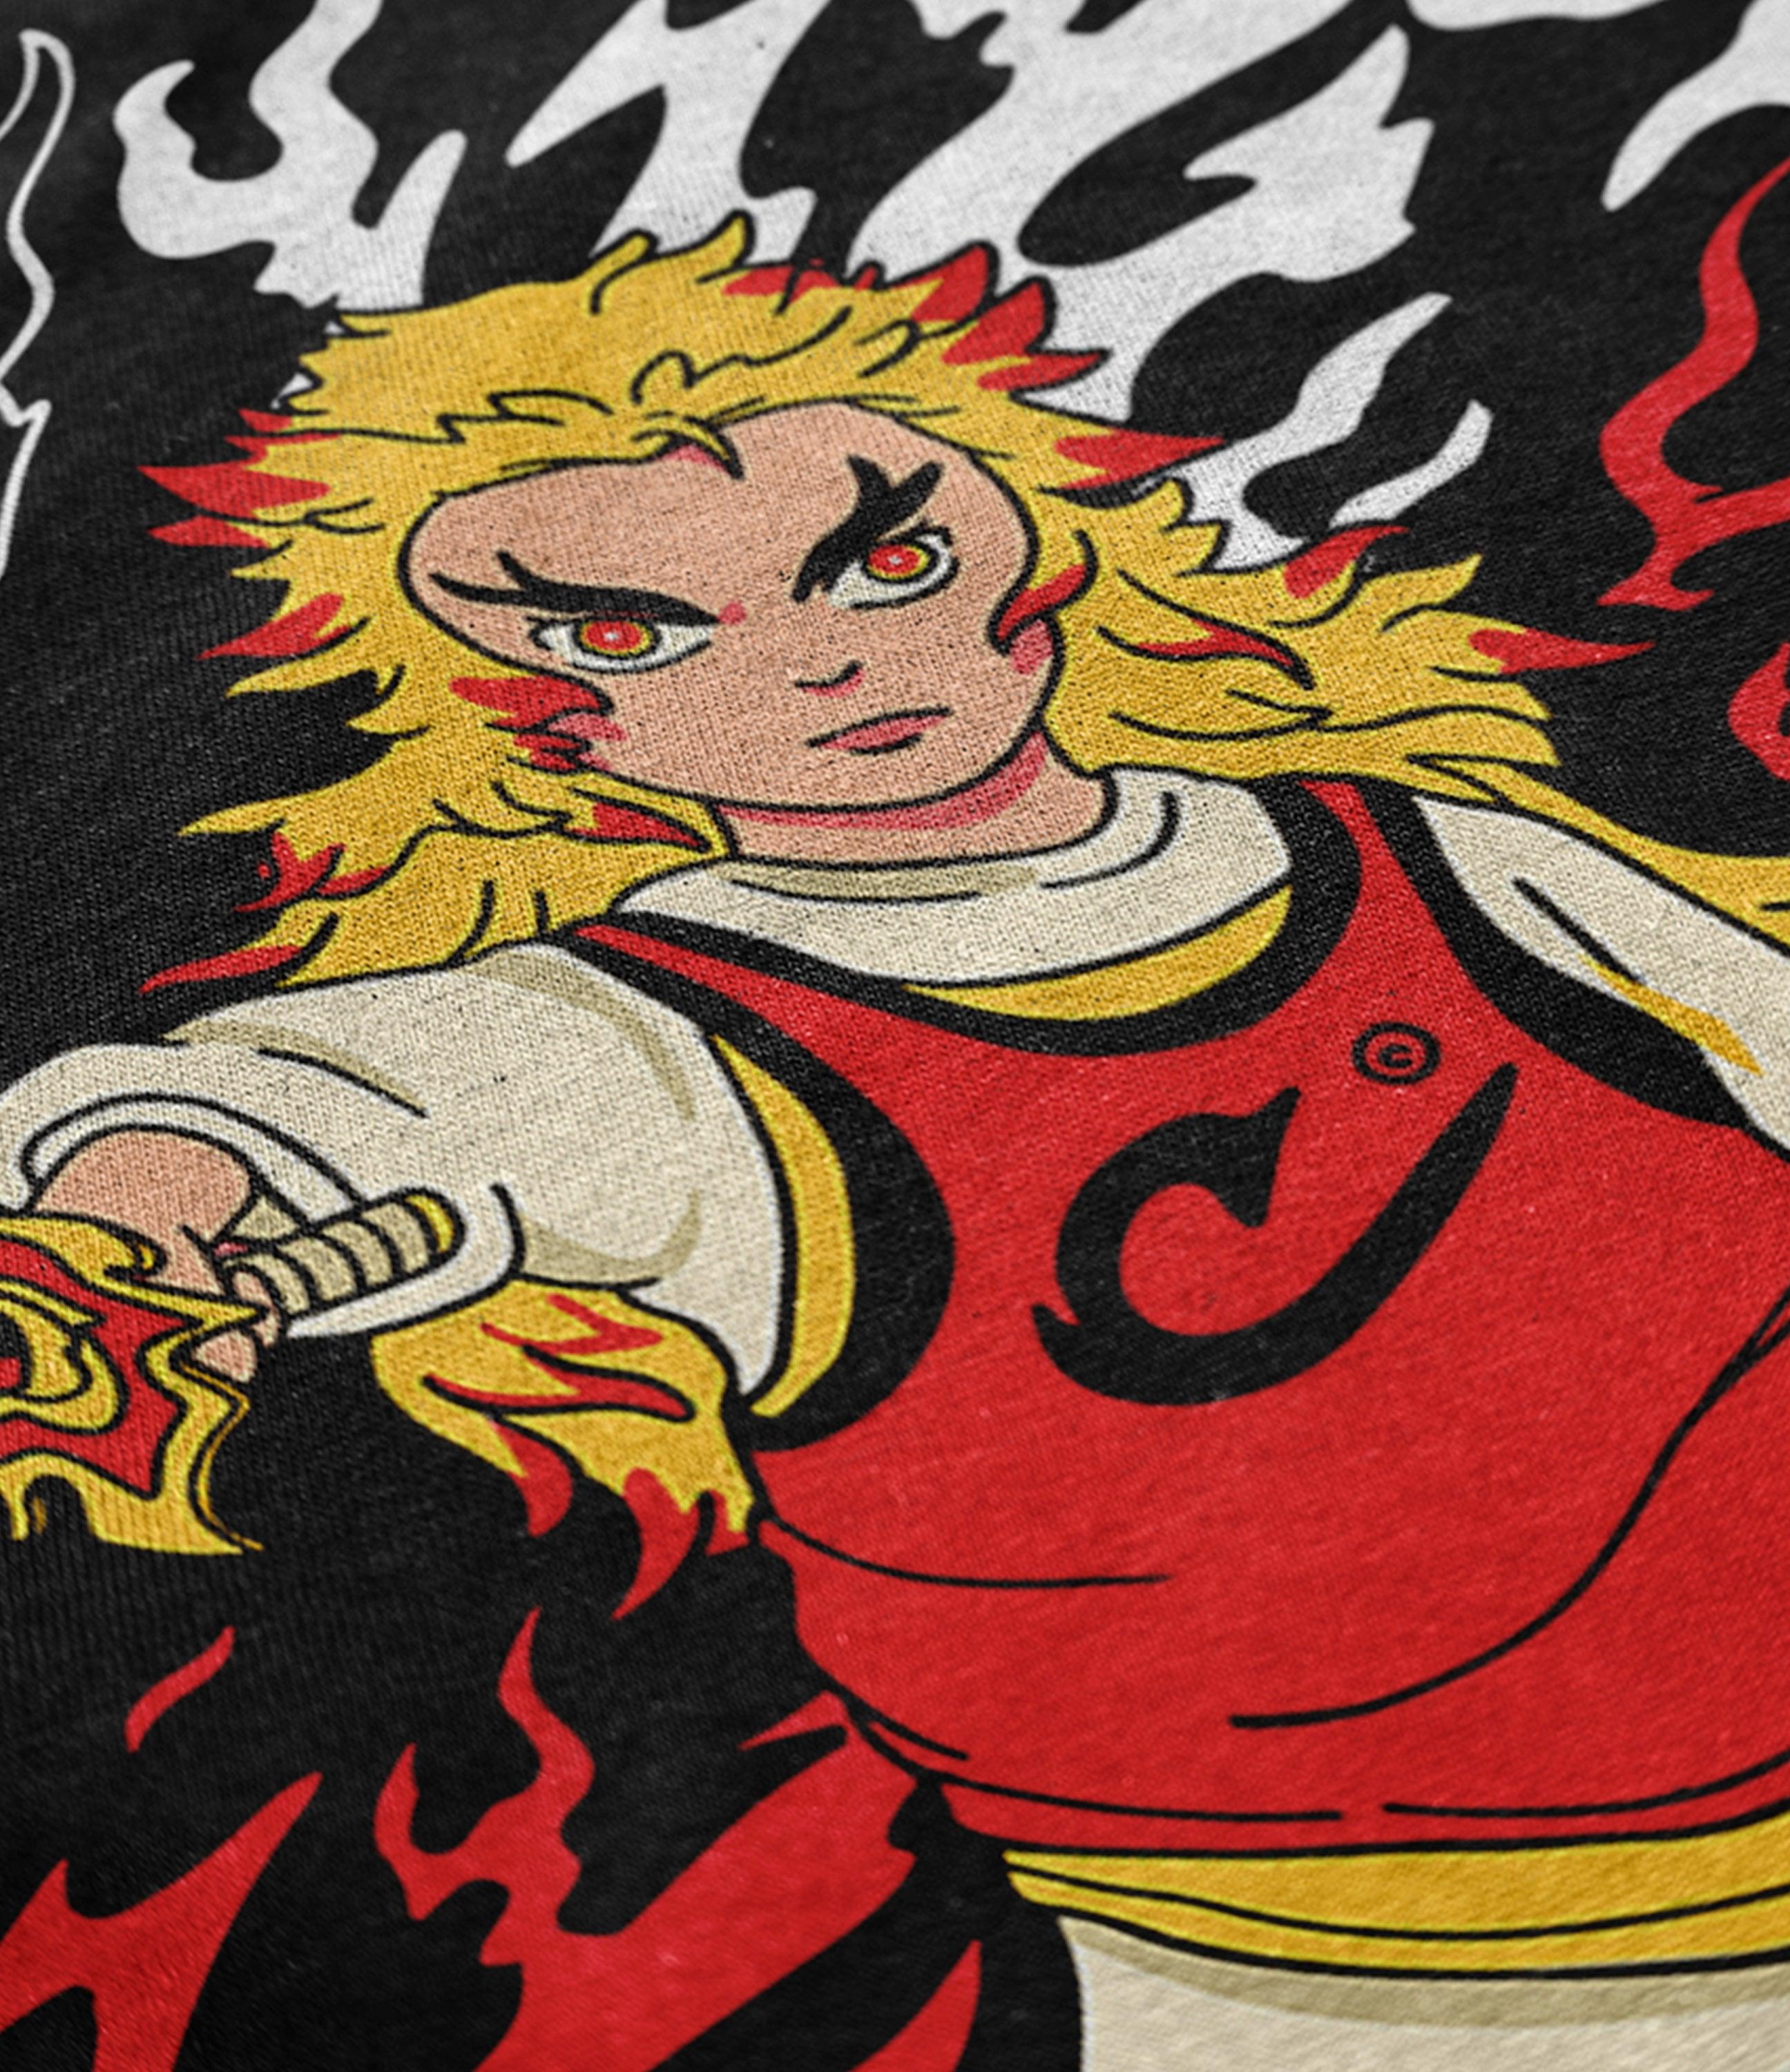 FireBall Hoodie at Catori Clothing | Graphic & Anime Tees, Hoodies & Sweatshirts 